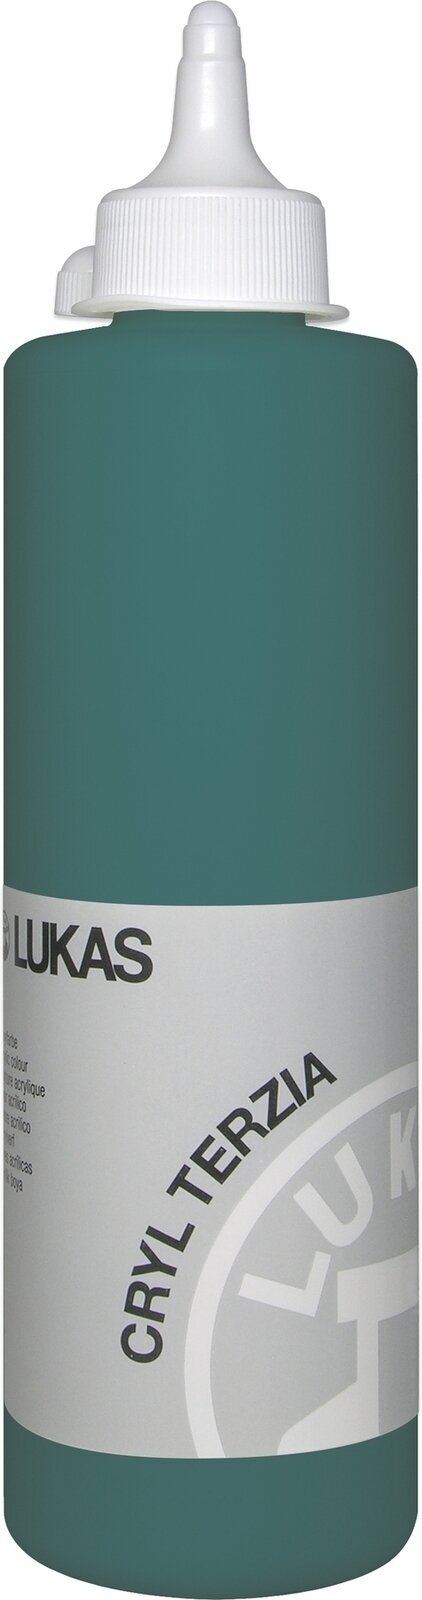 Akrylová farba Lukas Cryl Terzia Acrylic Paint Plastic Bottle Akrylová farba Viridian Hue 500 ml 1 ks